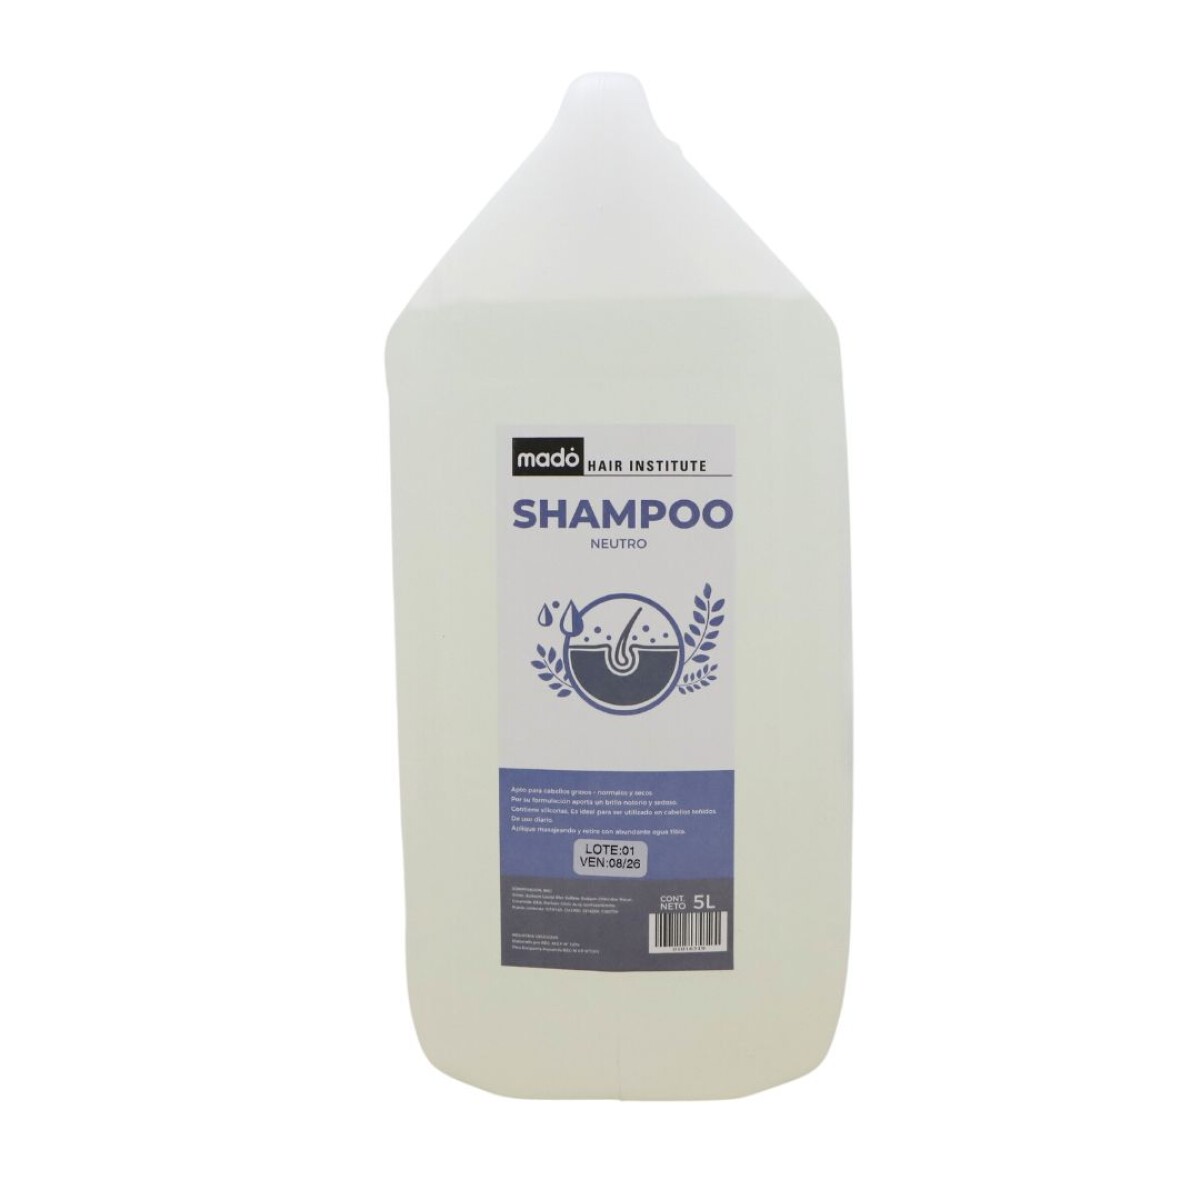 Shampoo MADO - Neutro - 5 L 